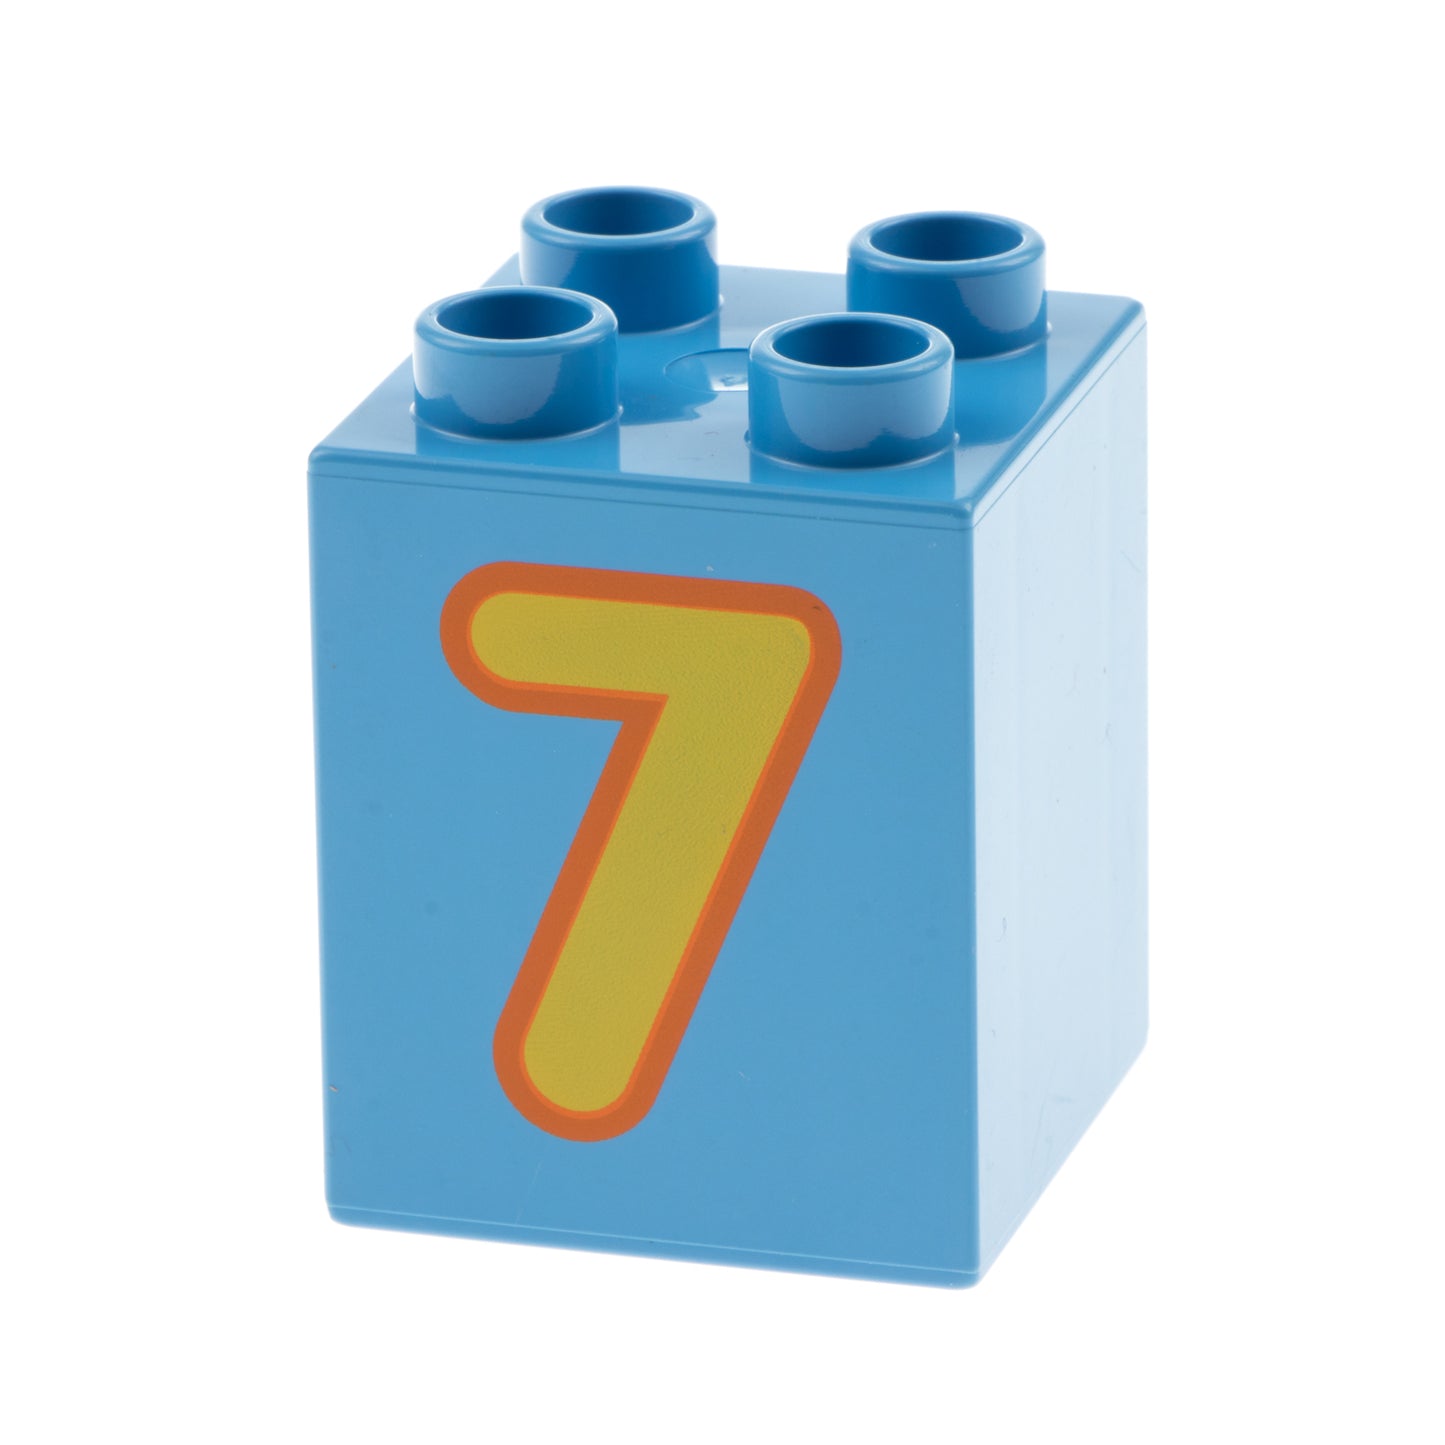 LEGO DUPLO  31110pb079 Medium Blue, Brick 2 x 2 x 2 with Number 7 Yellow Pattern- USADO